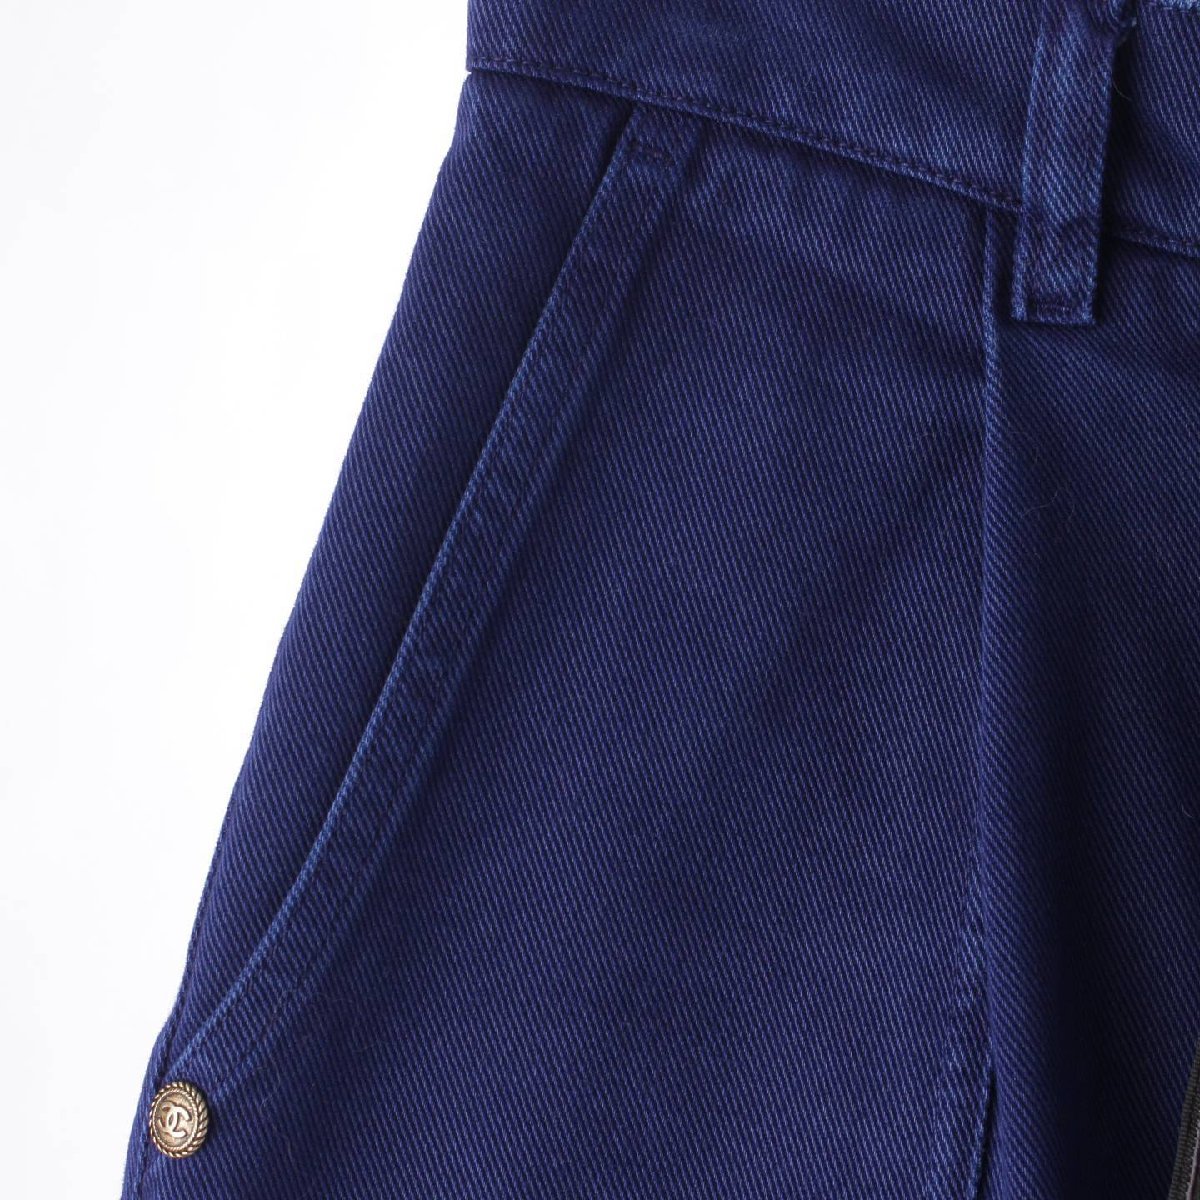 [ Chanel ]Chanel 18 year cotton matelasse ribbon high waist wide Denim pants P58416 blue 36 [ used ][ regular goods guarantee ]200507